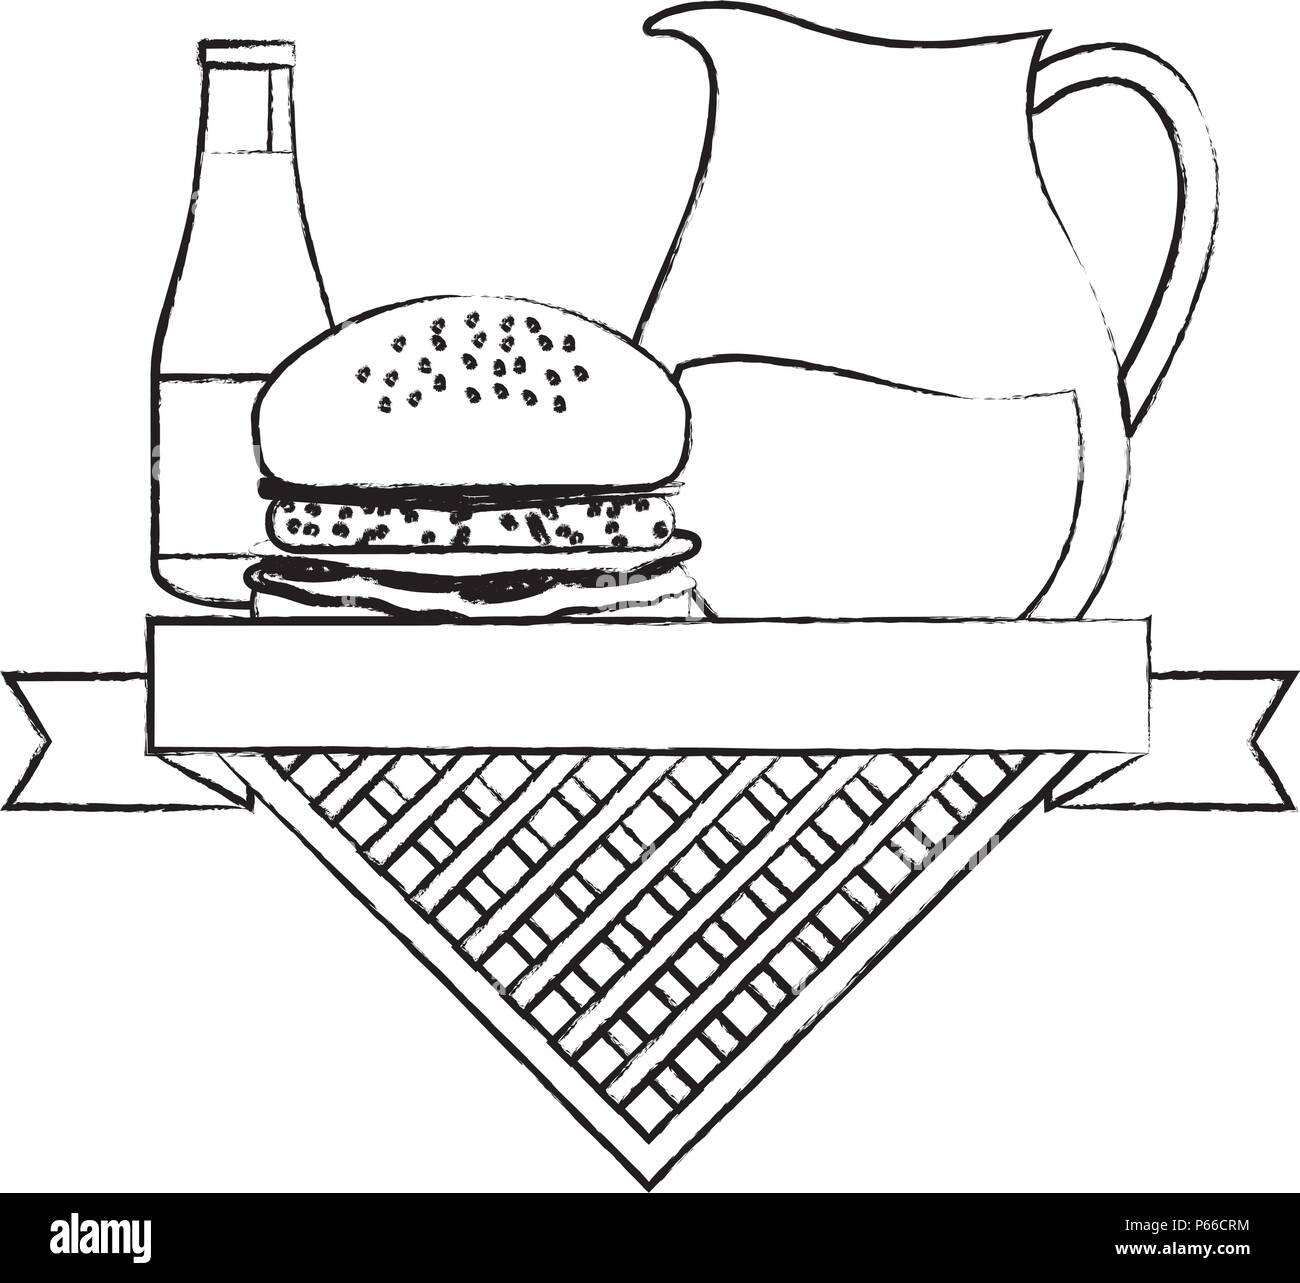 https://c8.alamy.com/comp/P66CRM/picnic-emblem-with-hamburger-and-lemonade-pitcher-icon-over-white-background-vector-illustration-P66CRM.jpg